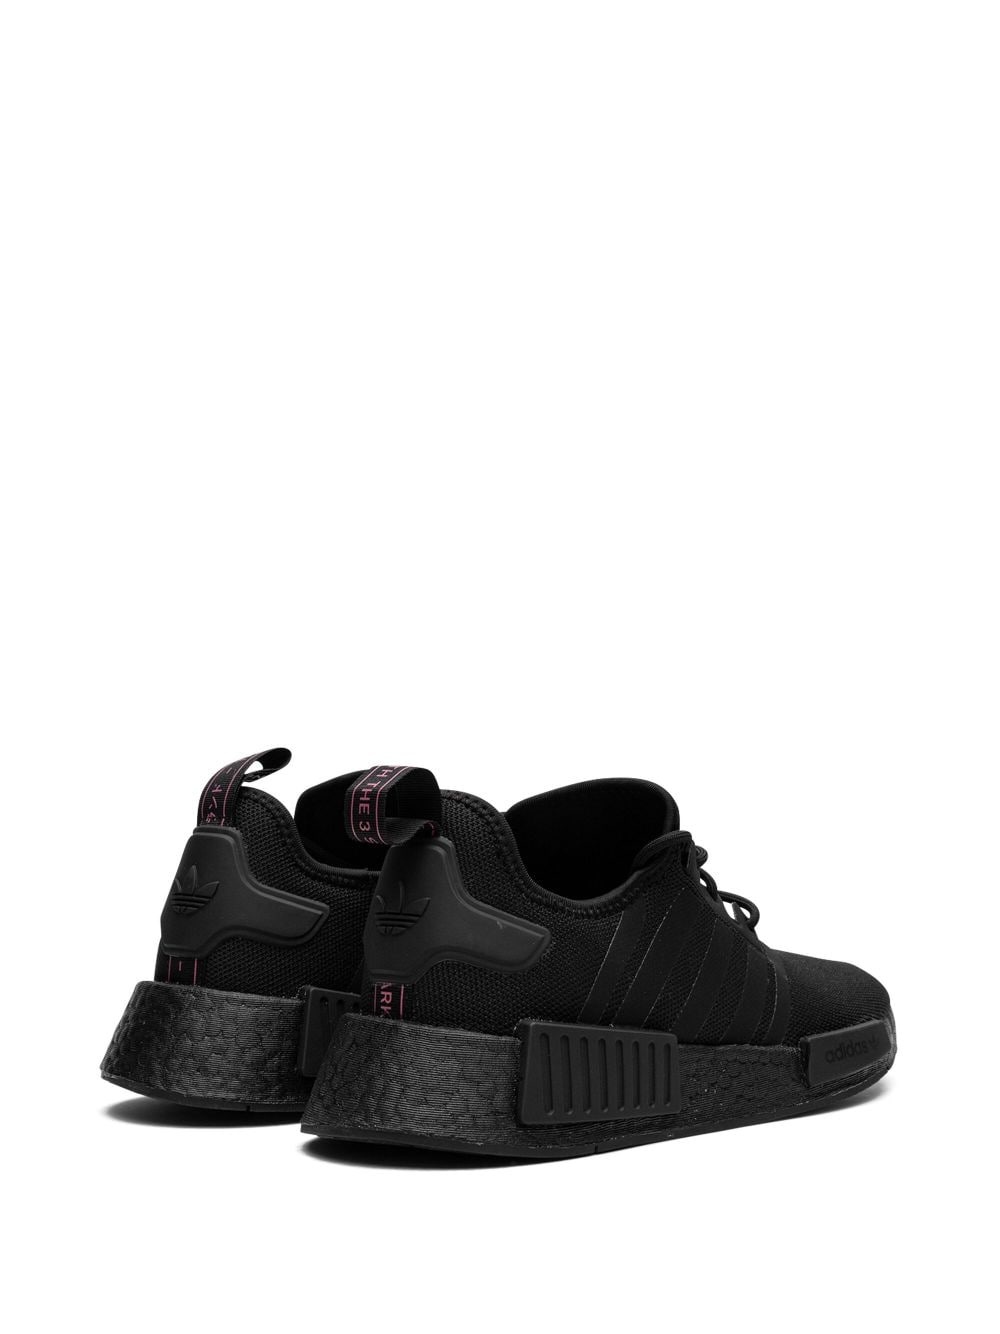 NMD_R1 "Black/Solar Pink" sneakers - 3